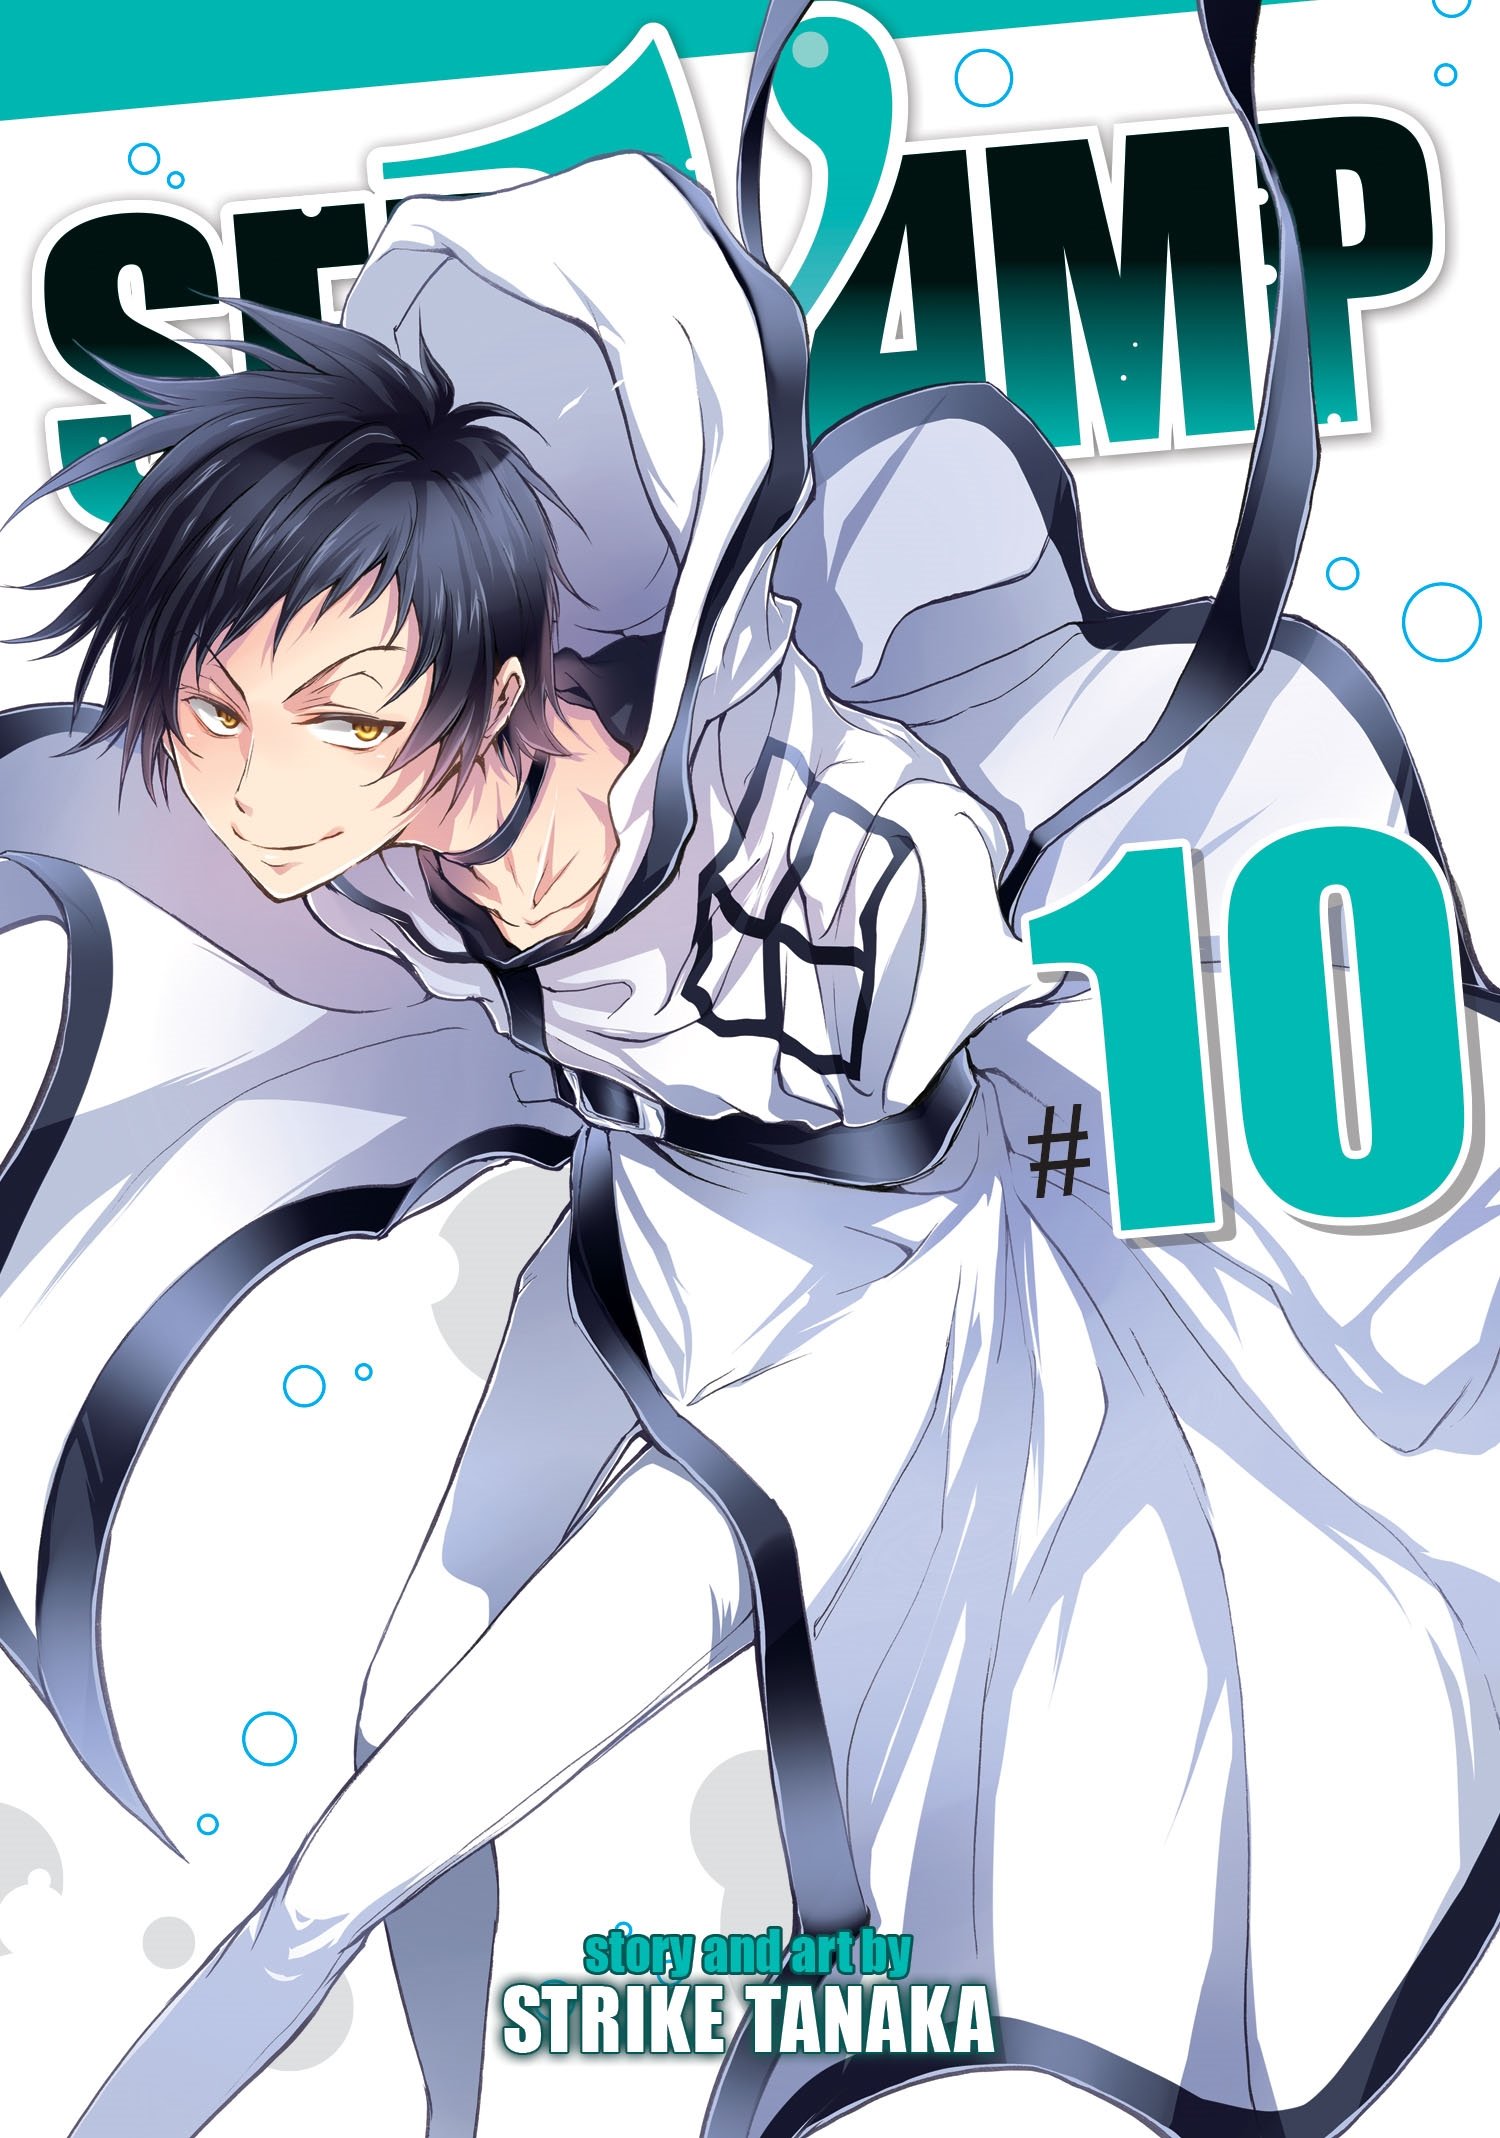 Servamp - Volume 10 | Strike Tanaka